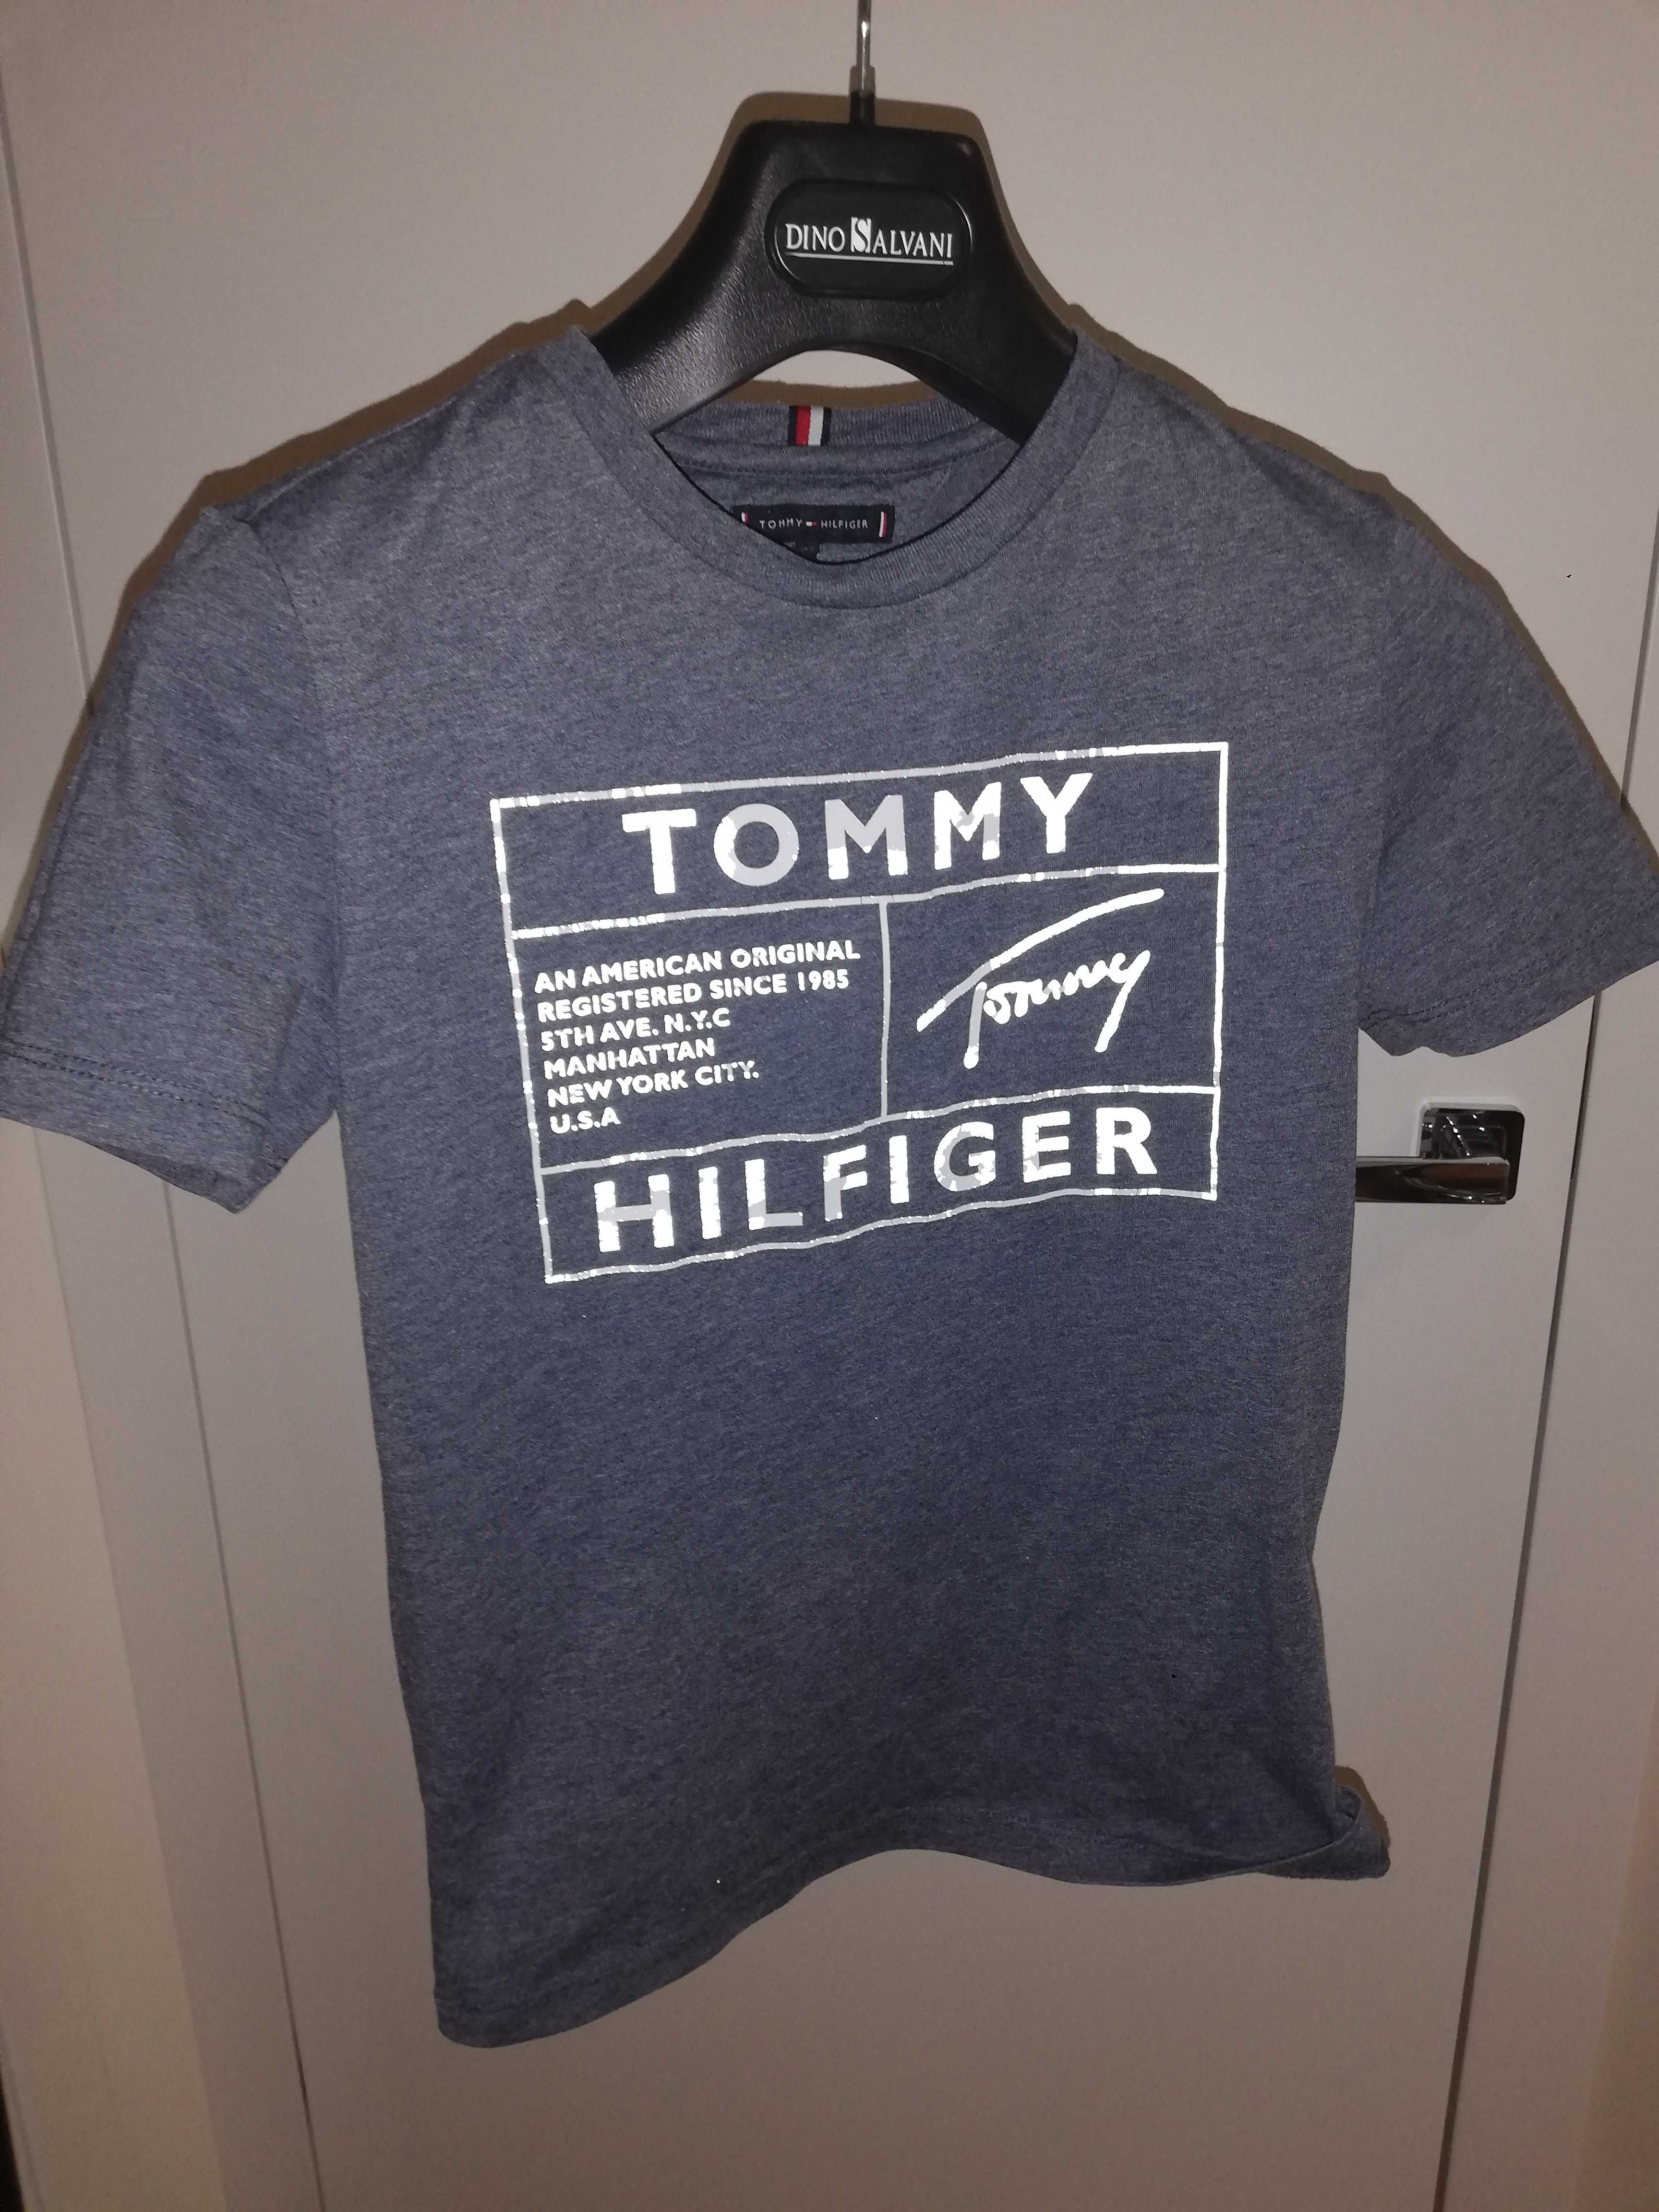 Koszulka Tommy Hilfiger, szara, rozmiar 152